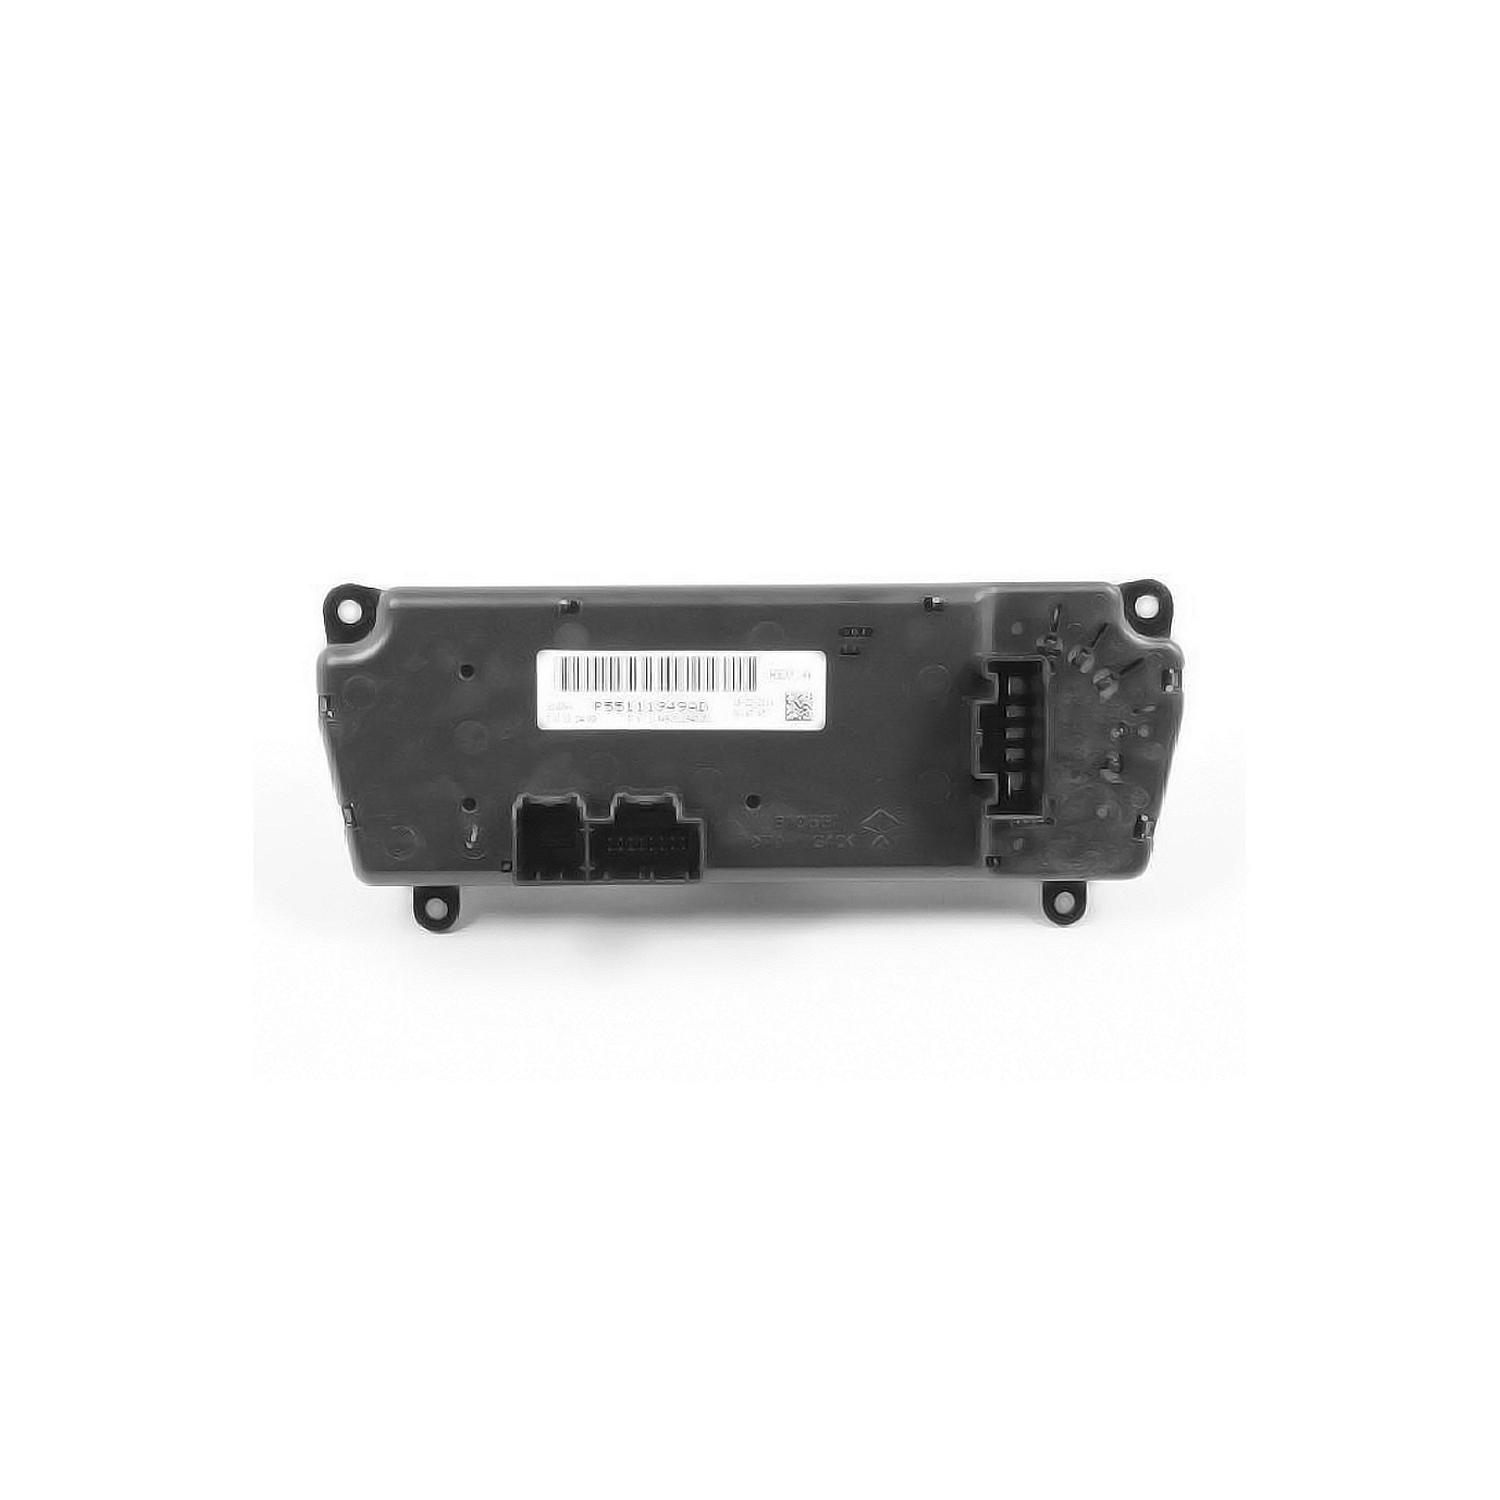 MOPAR BRAND - A/c And Heater Control Switch - MPB 55111949AF